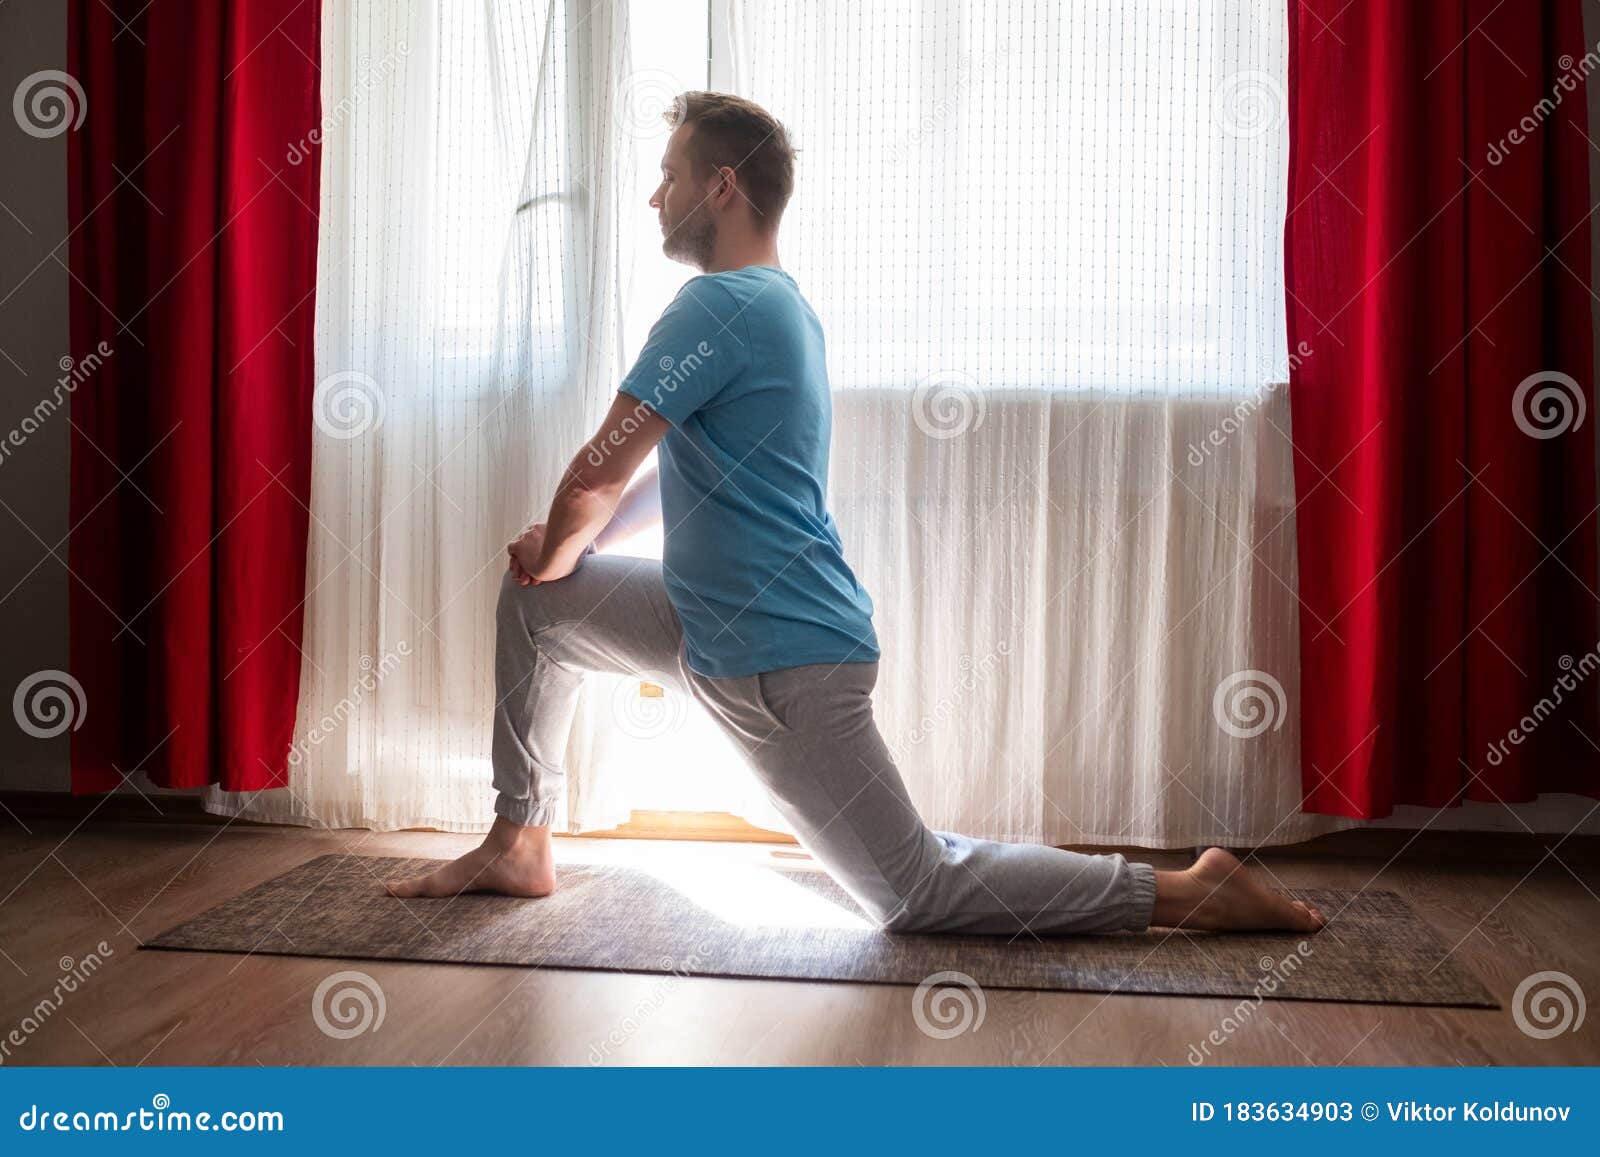 Caucasian Man In Anjaneyasana One Leg Lunge Pose Practicing Online At Home Stock Image Image Of Gymnastics Heterosexual 183634903